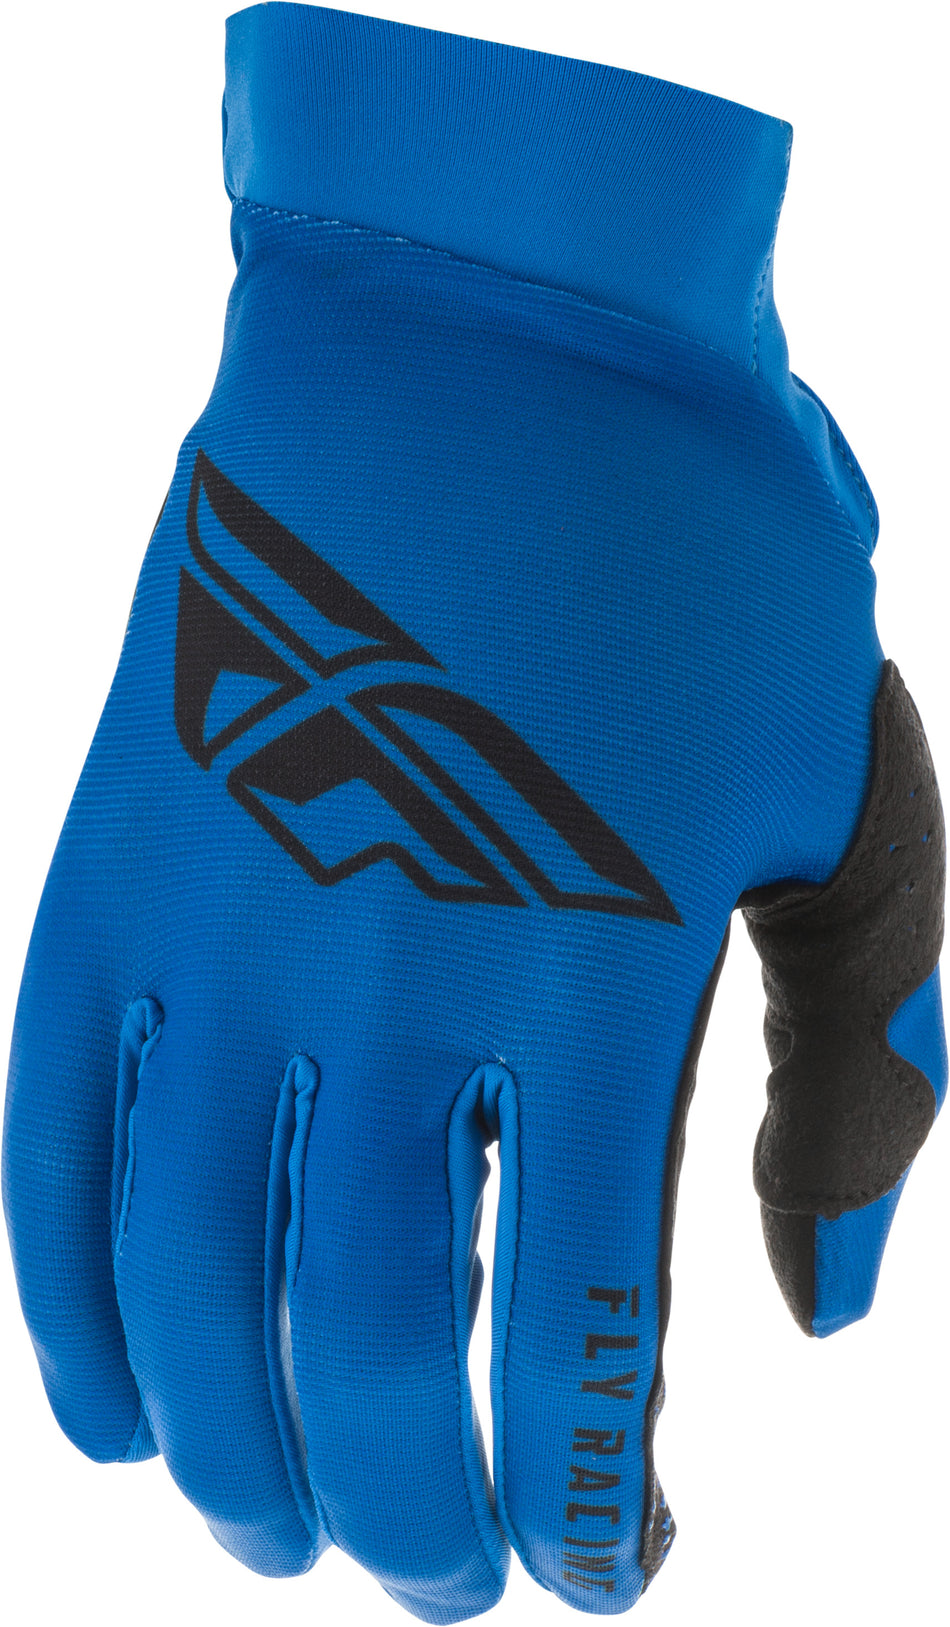 FLY RACING Pro Lite Gloves Blue/Black Sz 13 372-81513